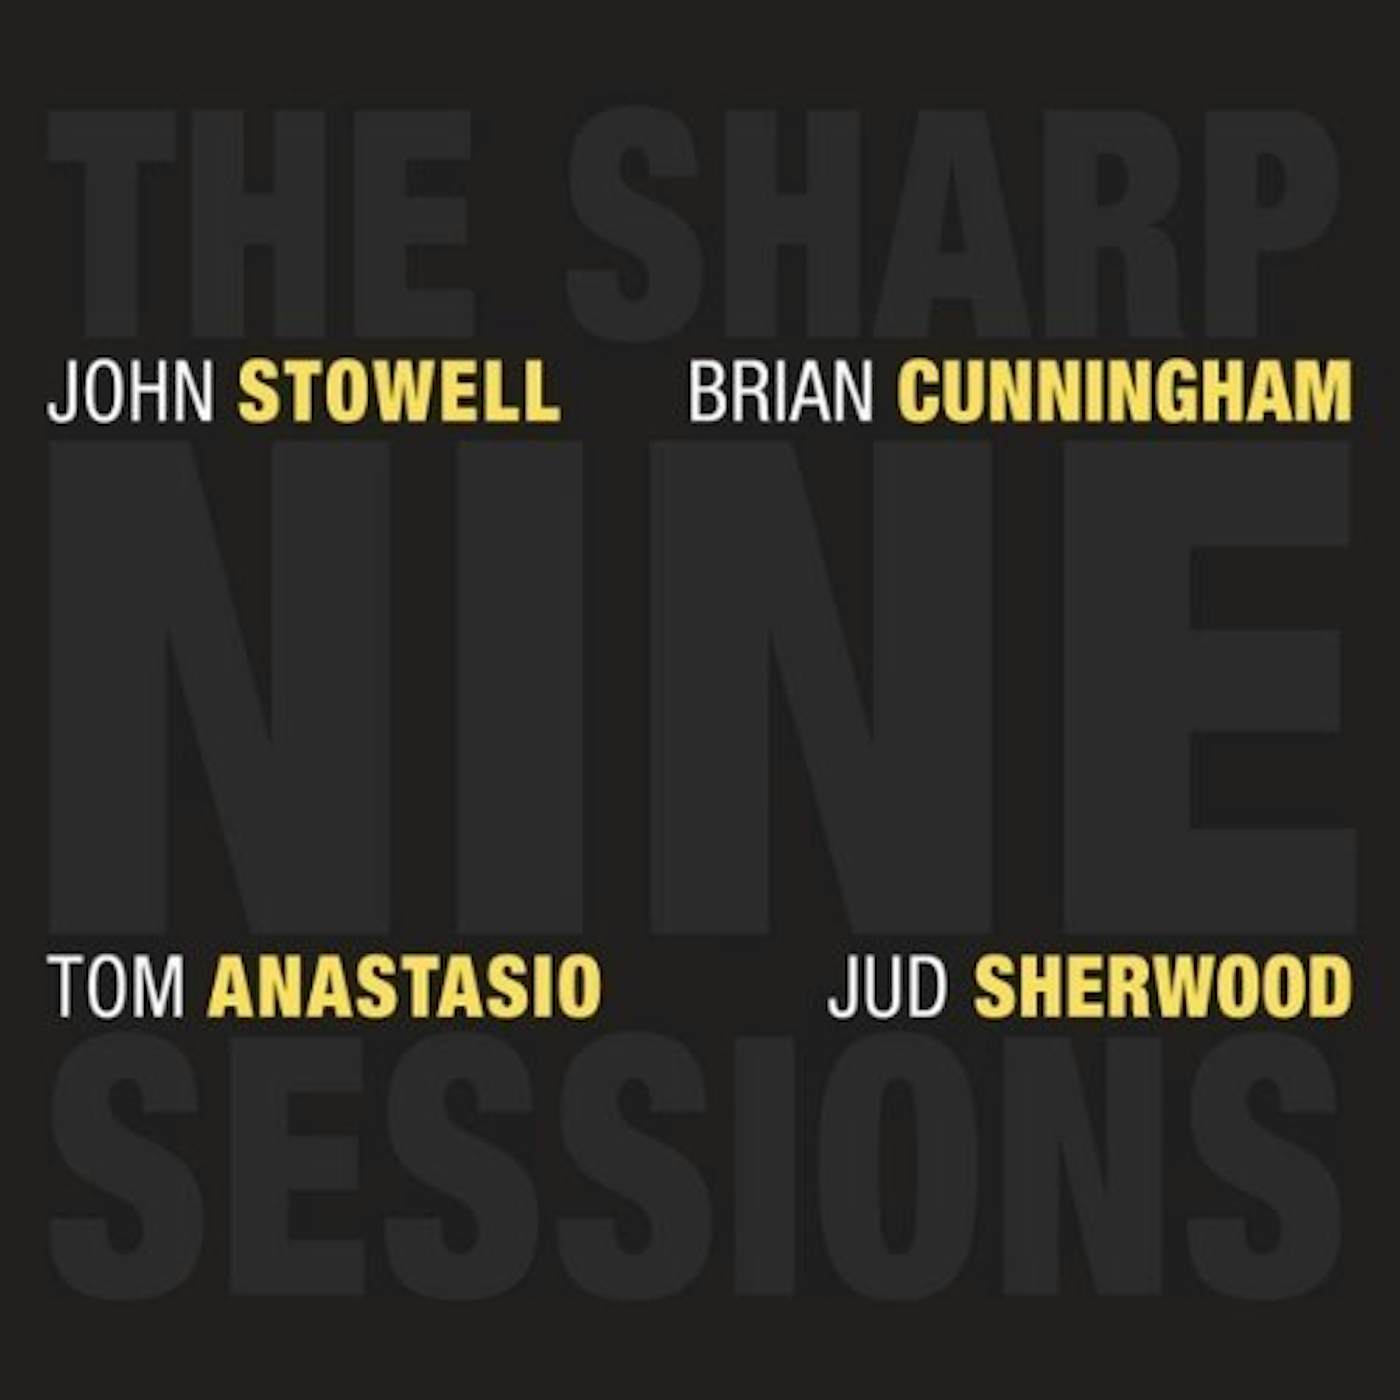 John Stowell THE SHARP NINE SESSIONS CD